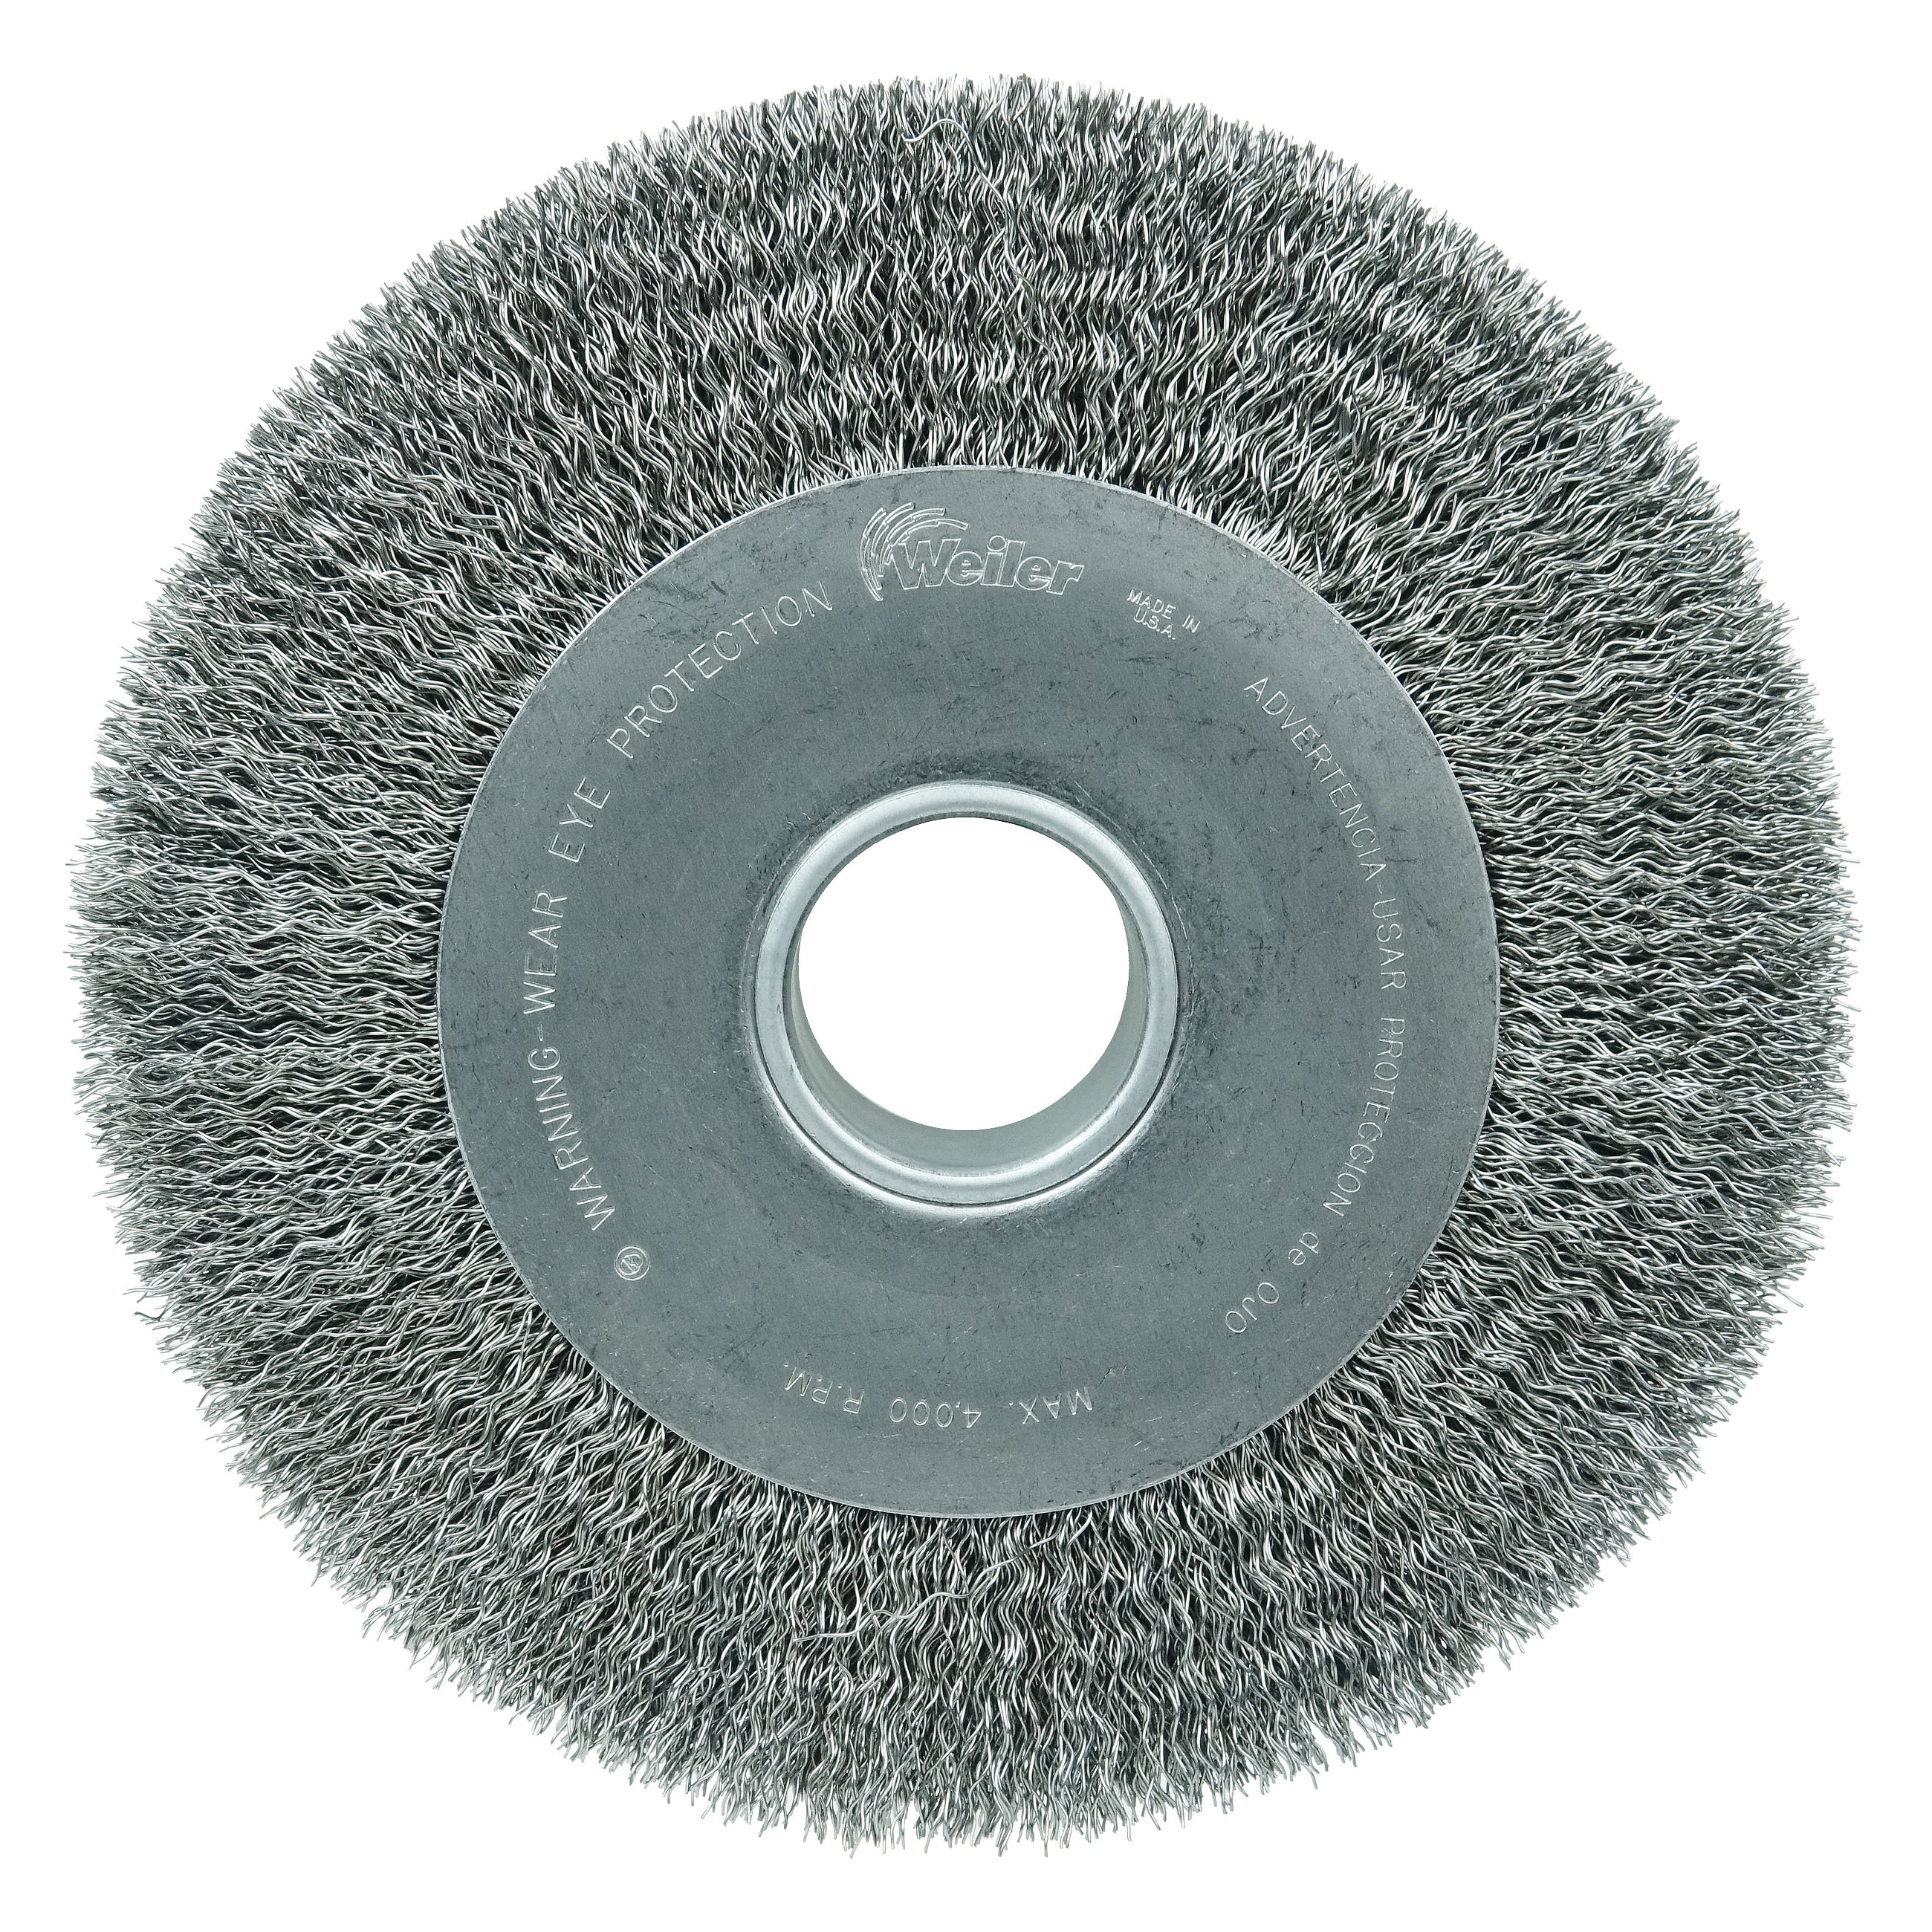 Weiler® 01515 High Density Medium Face Wheel Brush, 8 in Dia Brush, 7/8 in W Face, 0.014 in Dia Crimped Filament/Wire, 5/8 in Arbor Hole